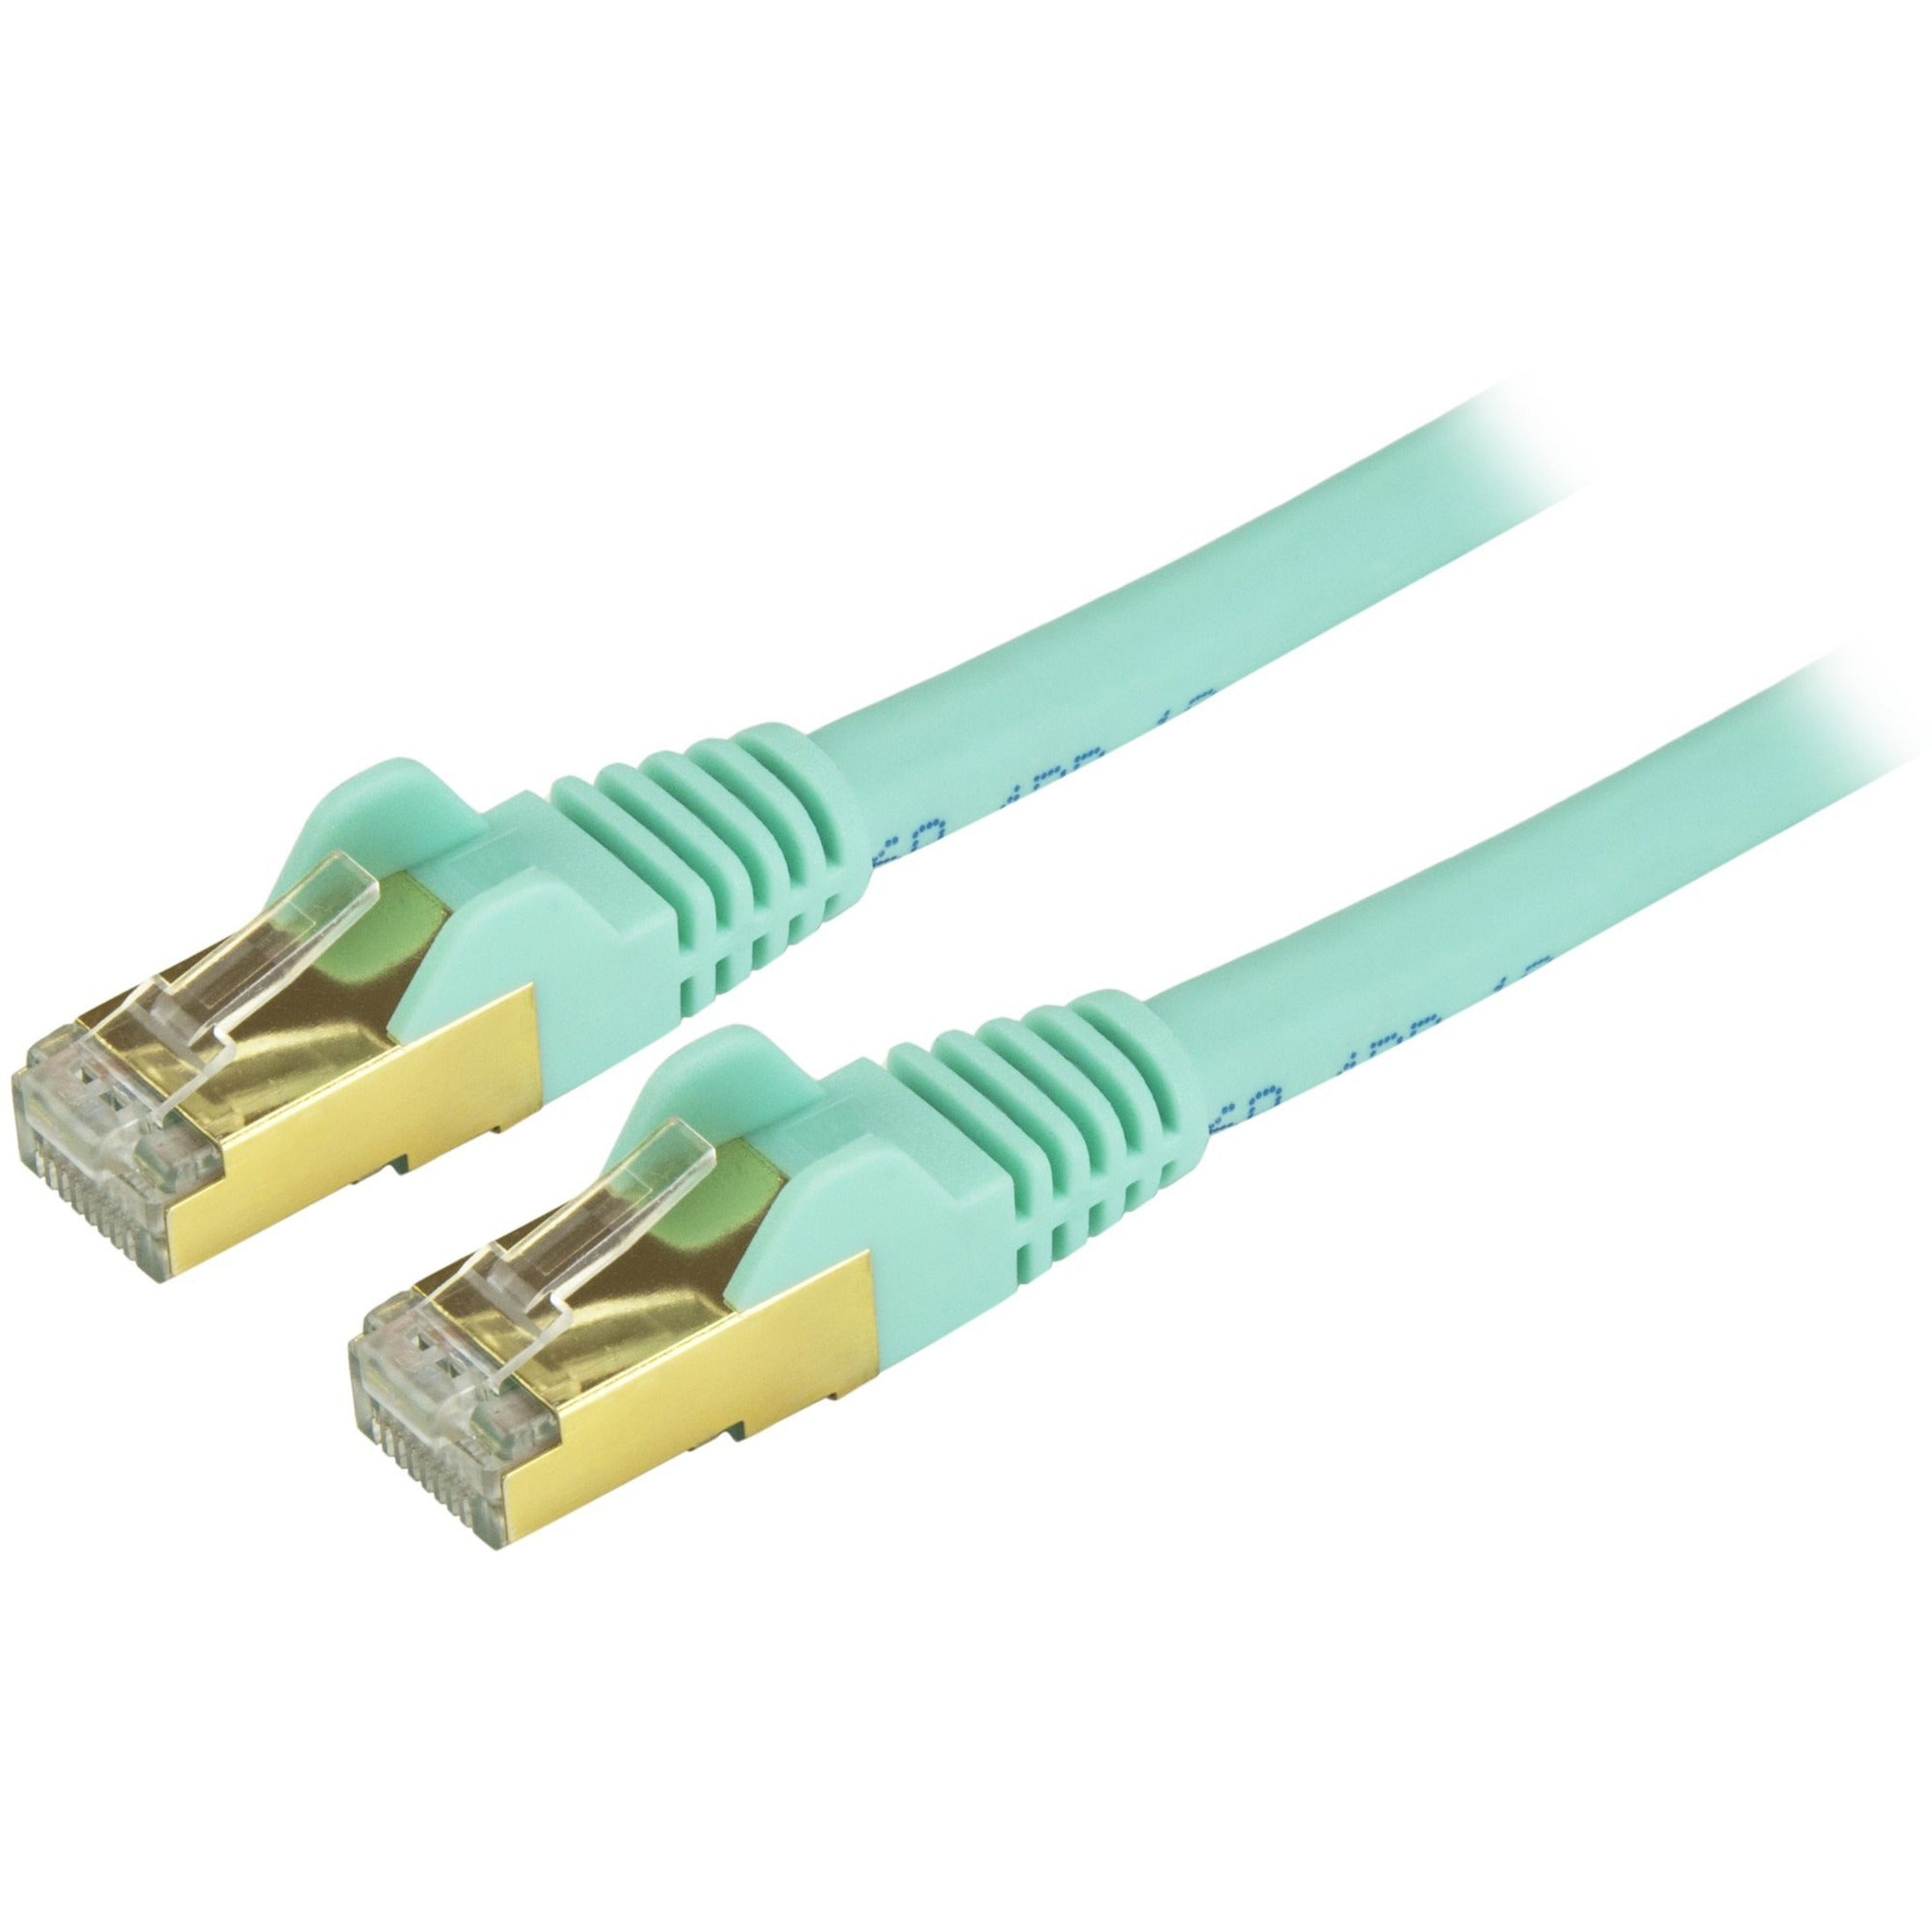 StarTech.com C6ASPAT4AQ Cat6a Ethernet Patch Cable - Shielded (STP) - 4 ft., Aqua, Snagless RJ45 Ethernet Cord